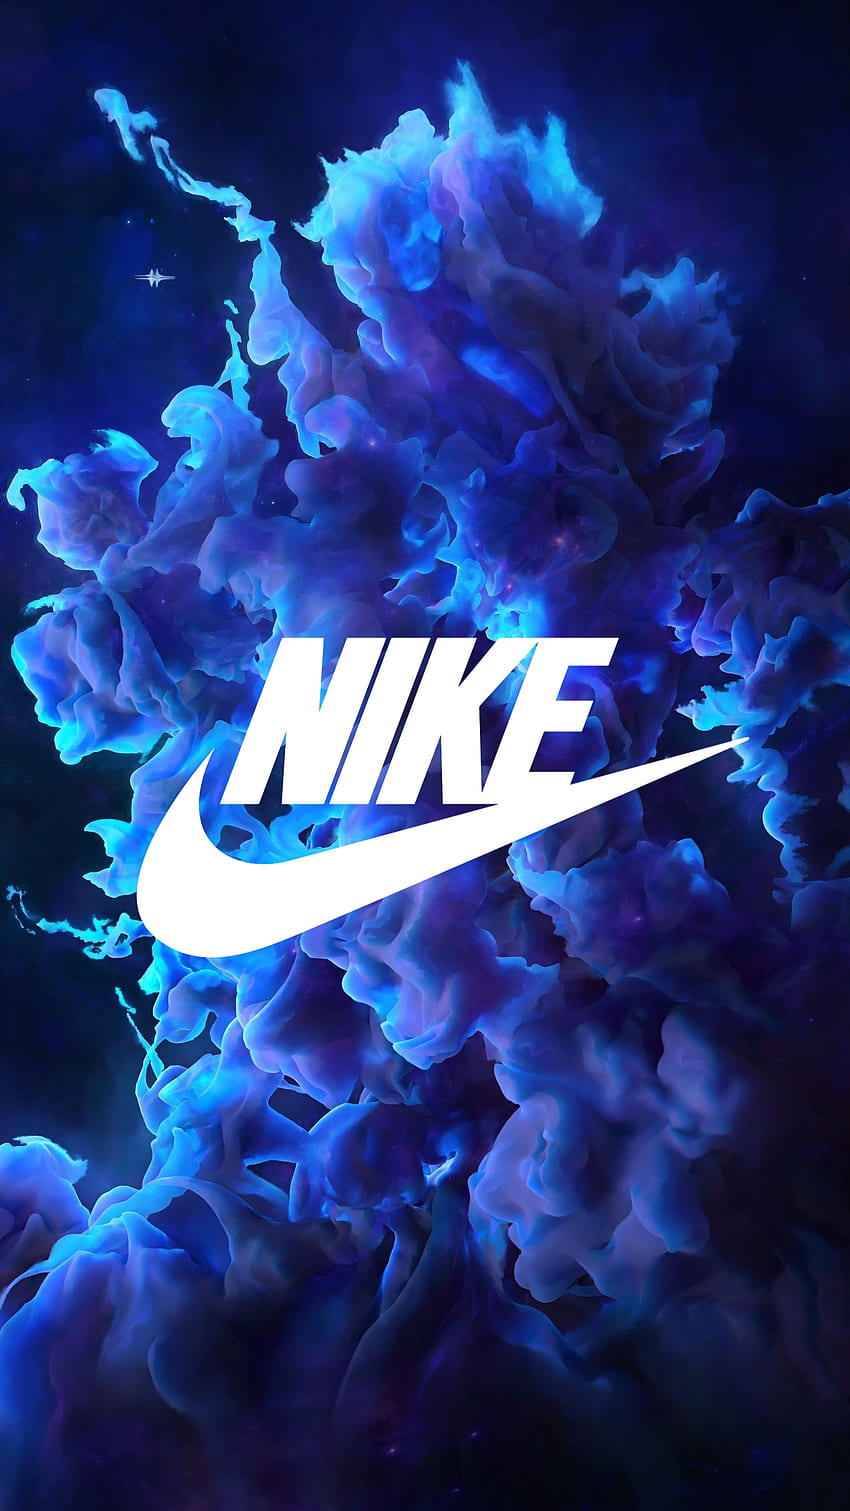 Nike  Nike wallpaper Nike logo wallpapers Nike